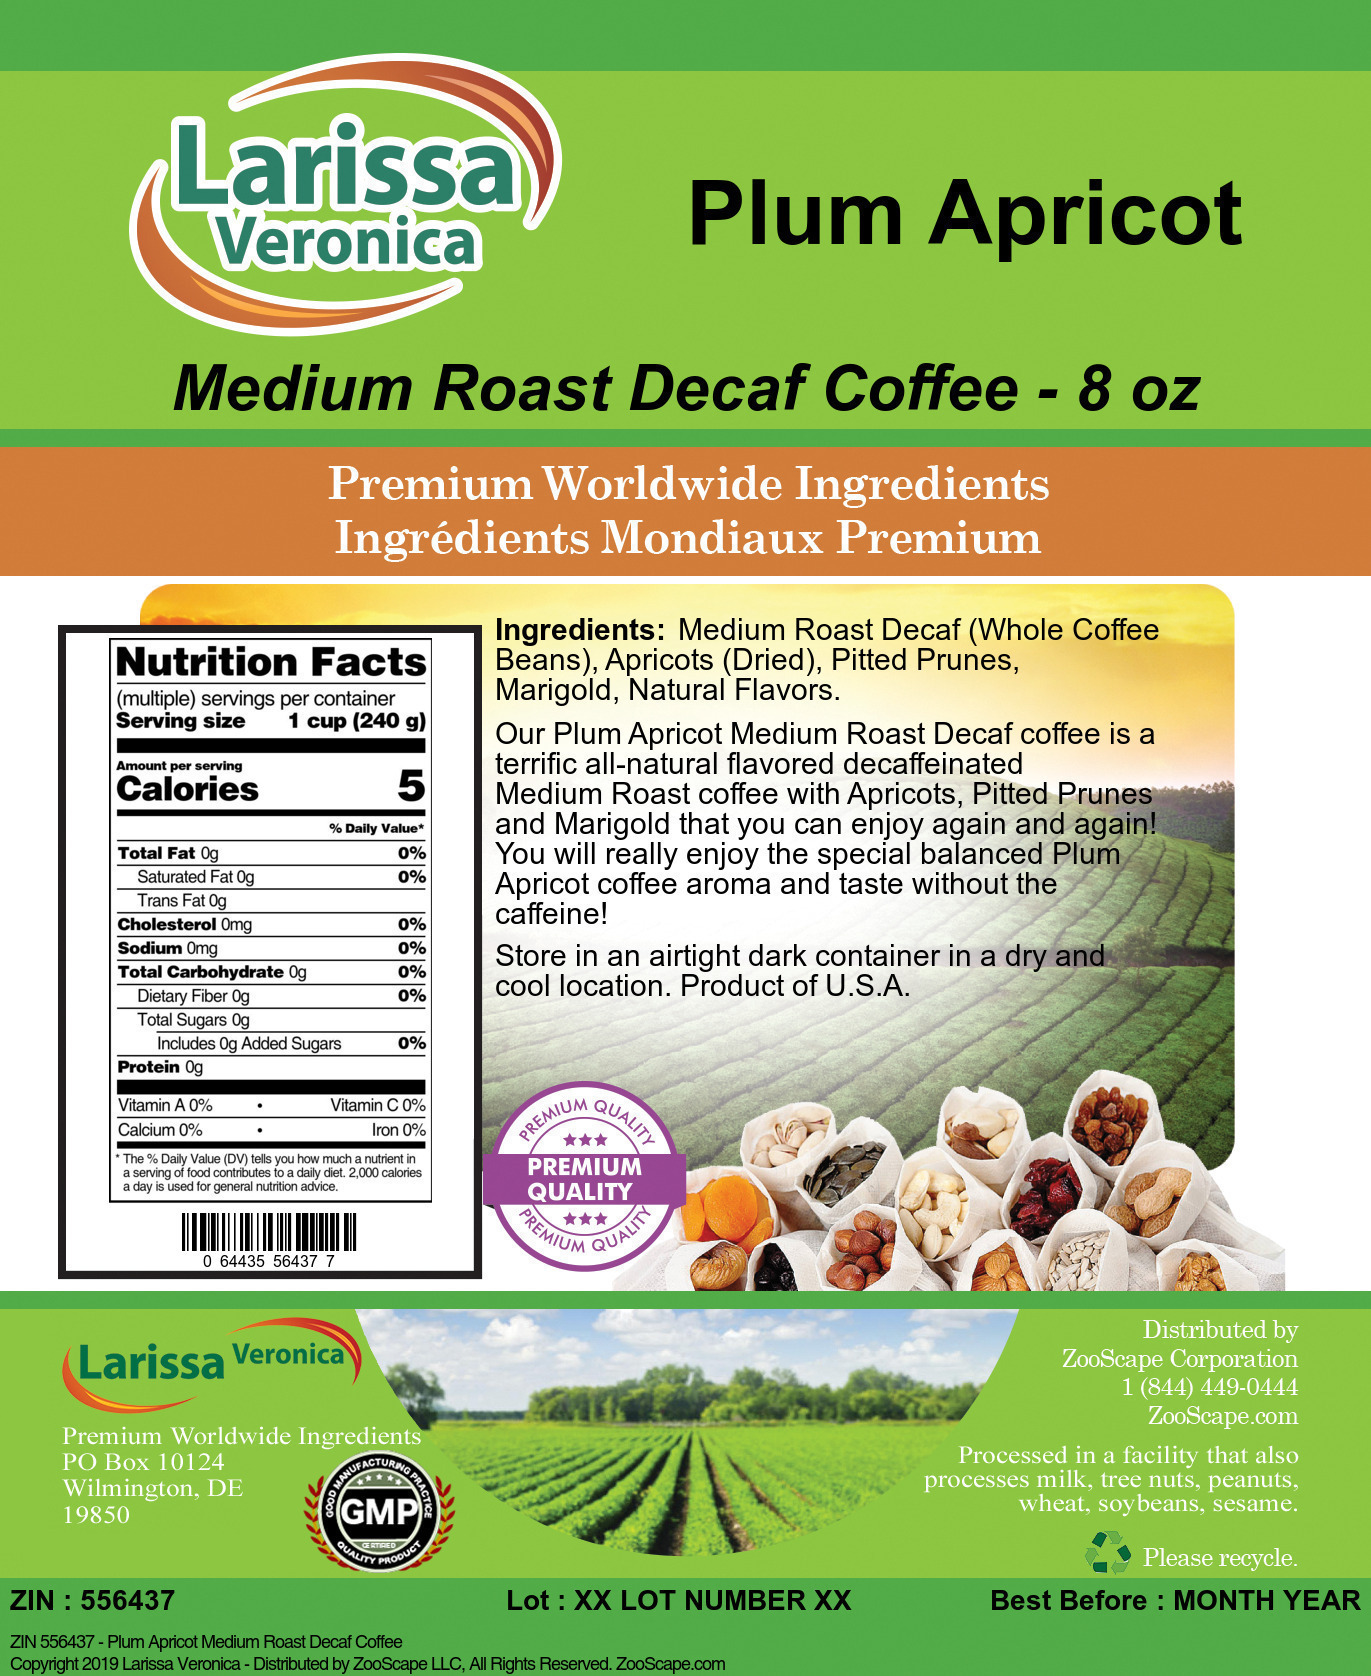 Plum Apricot Medium Roast Decaf Coffee - Label